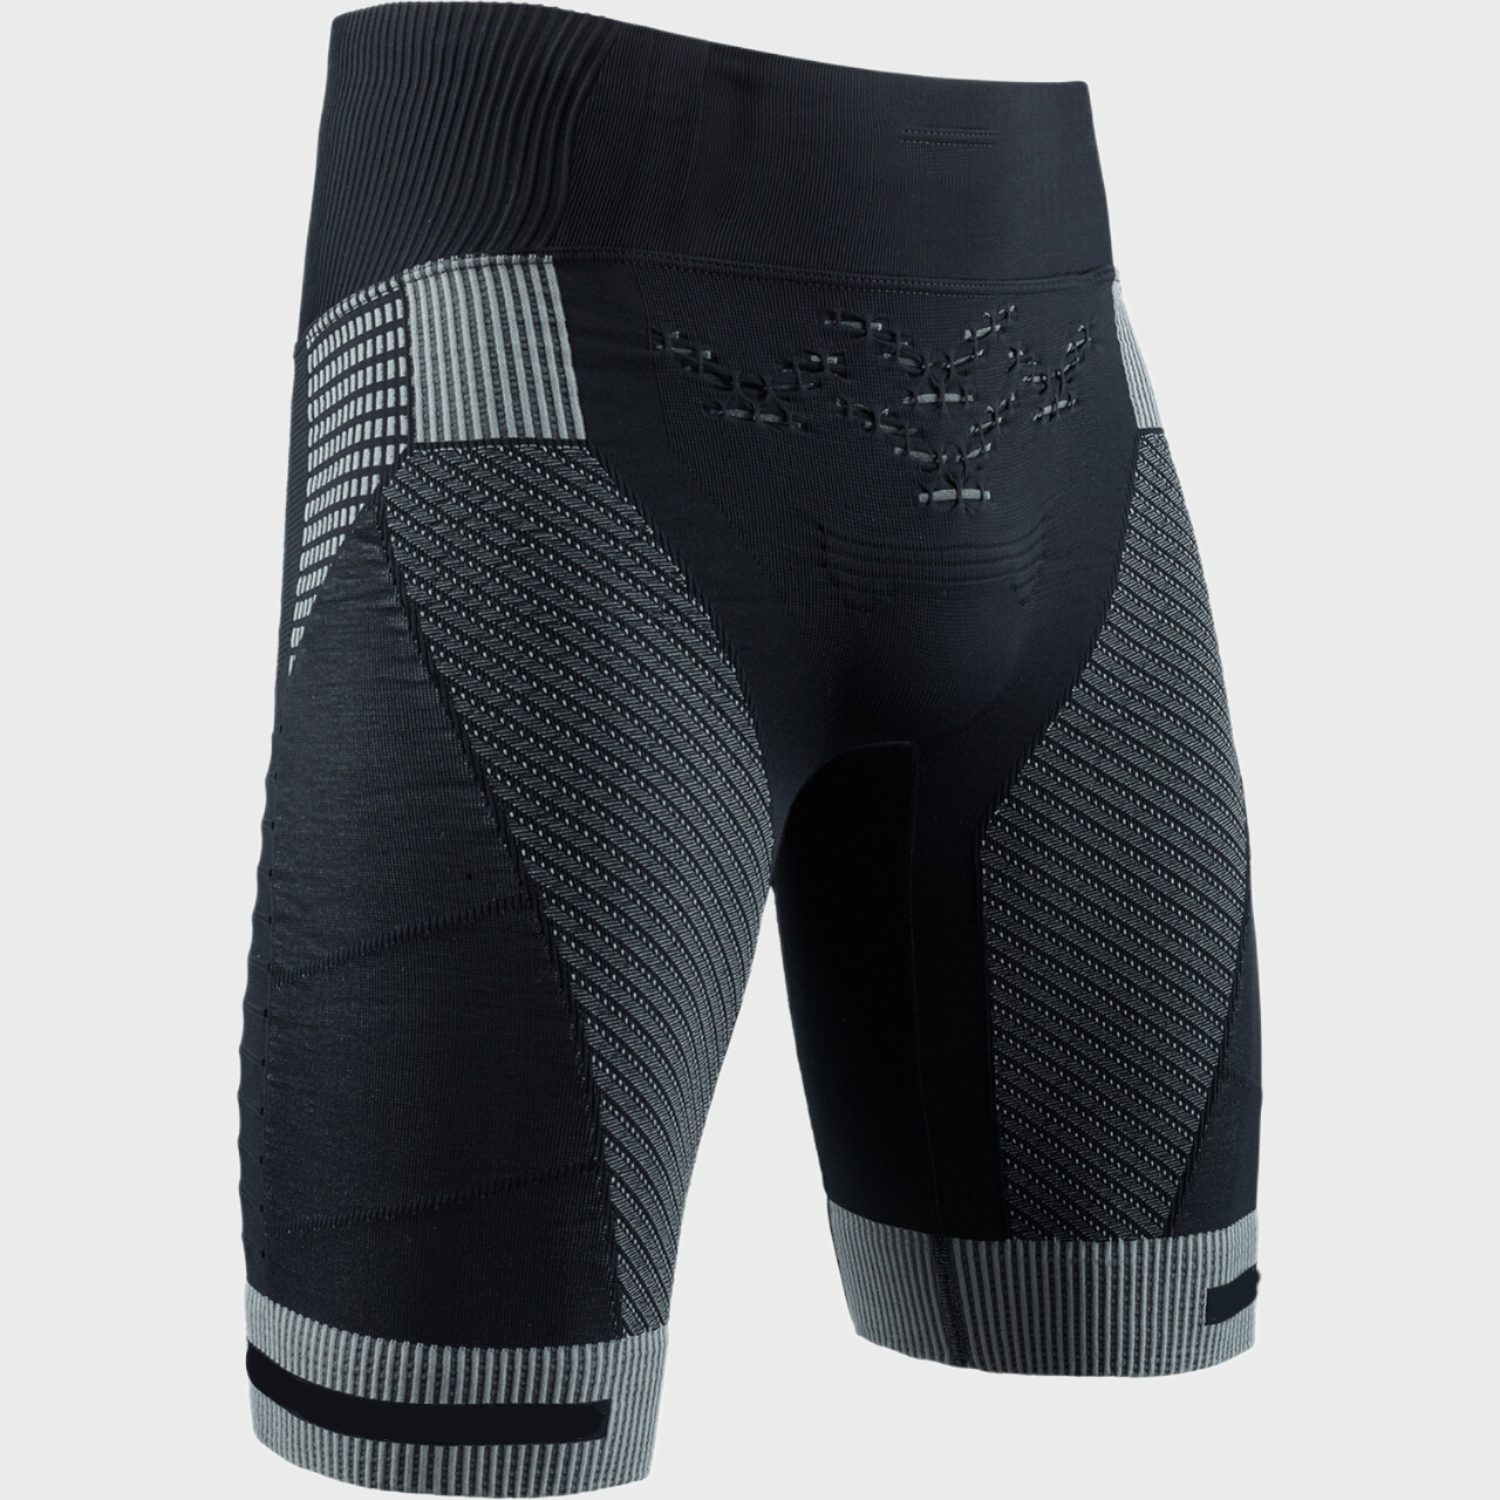 Men Cycling Compression Shorts